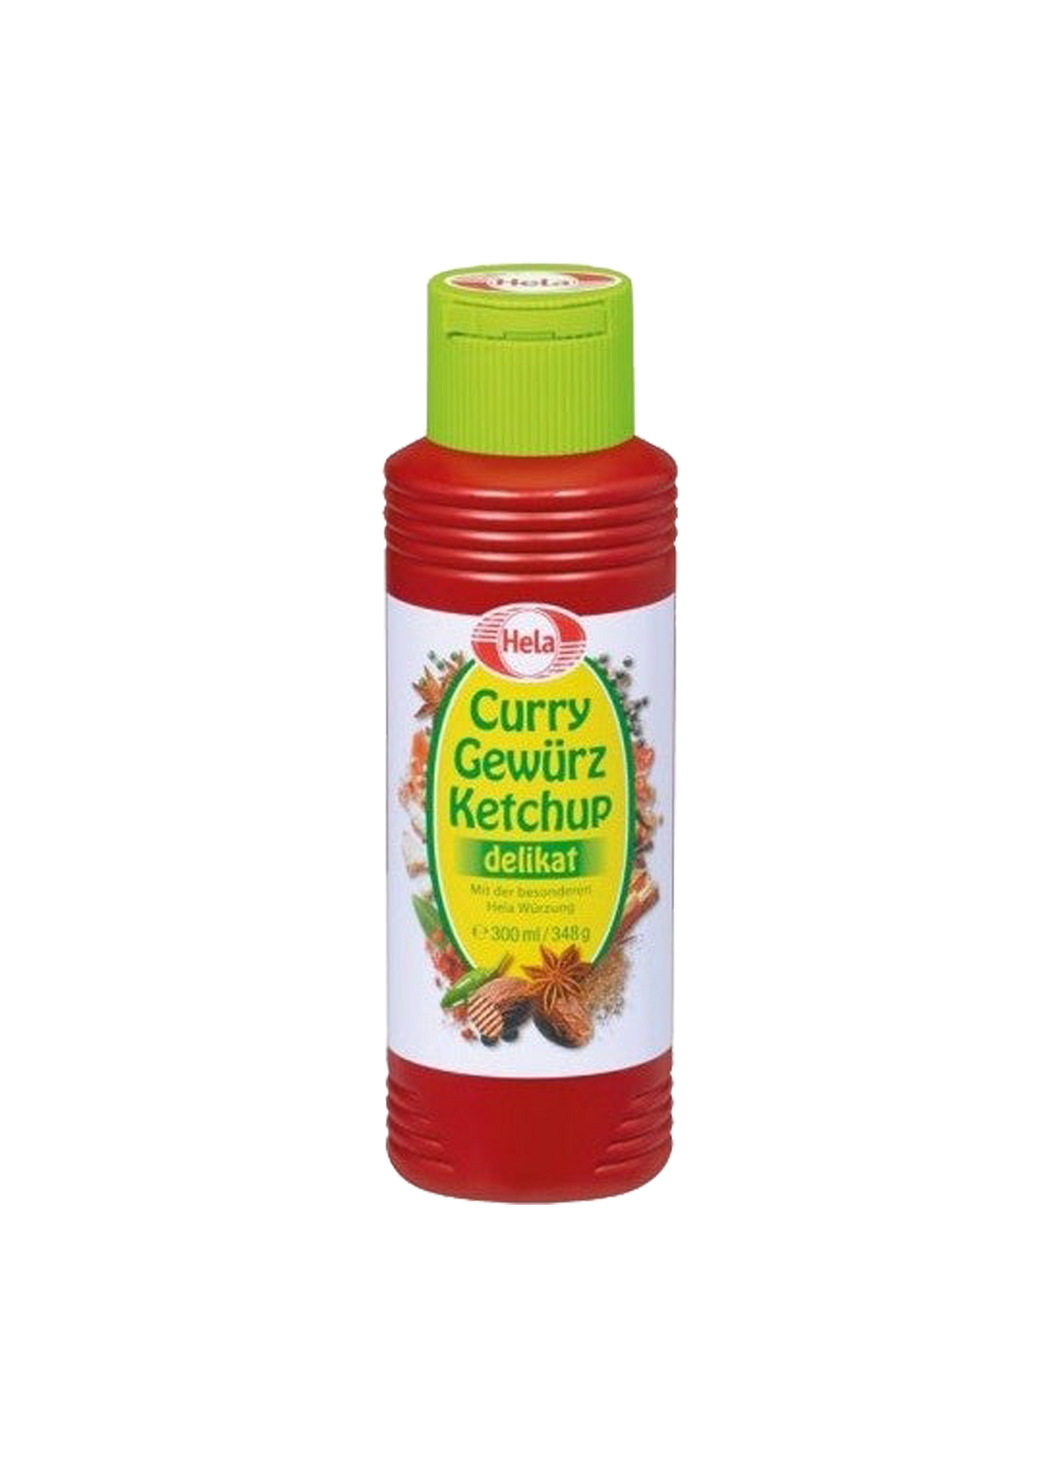 Hela Curry Ketchup Delikat 348g